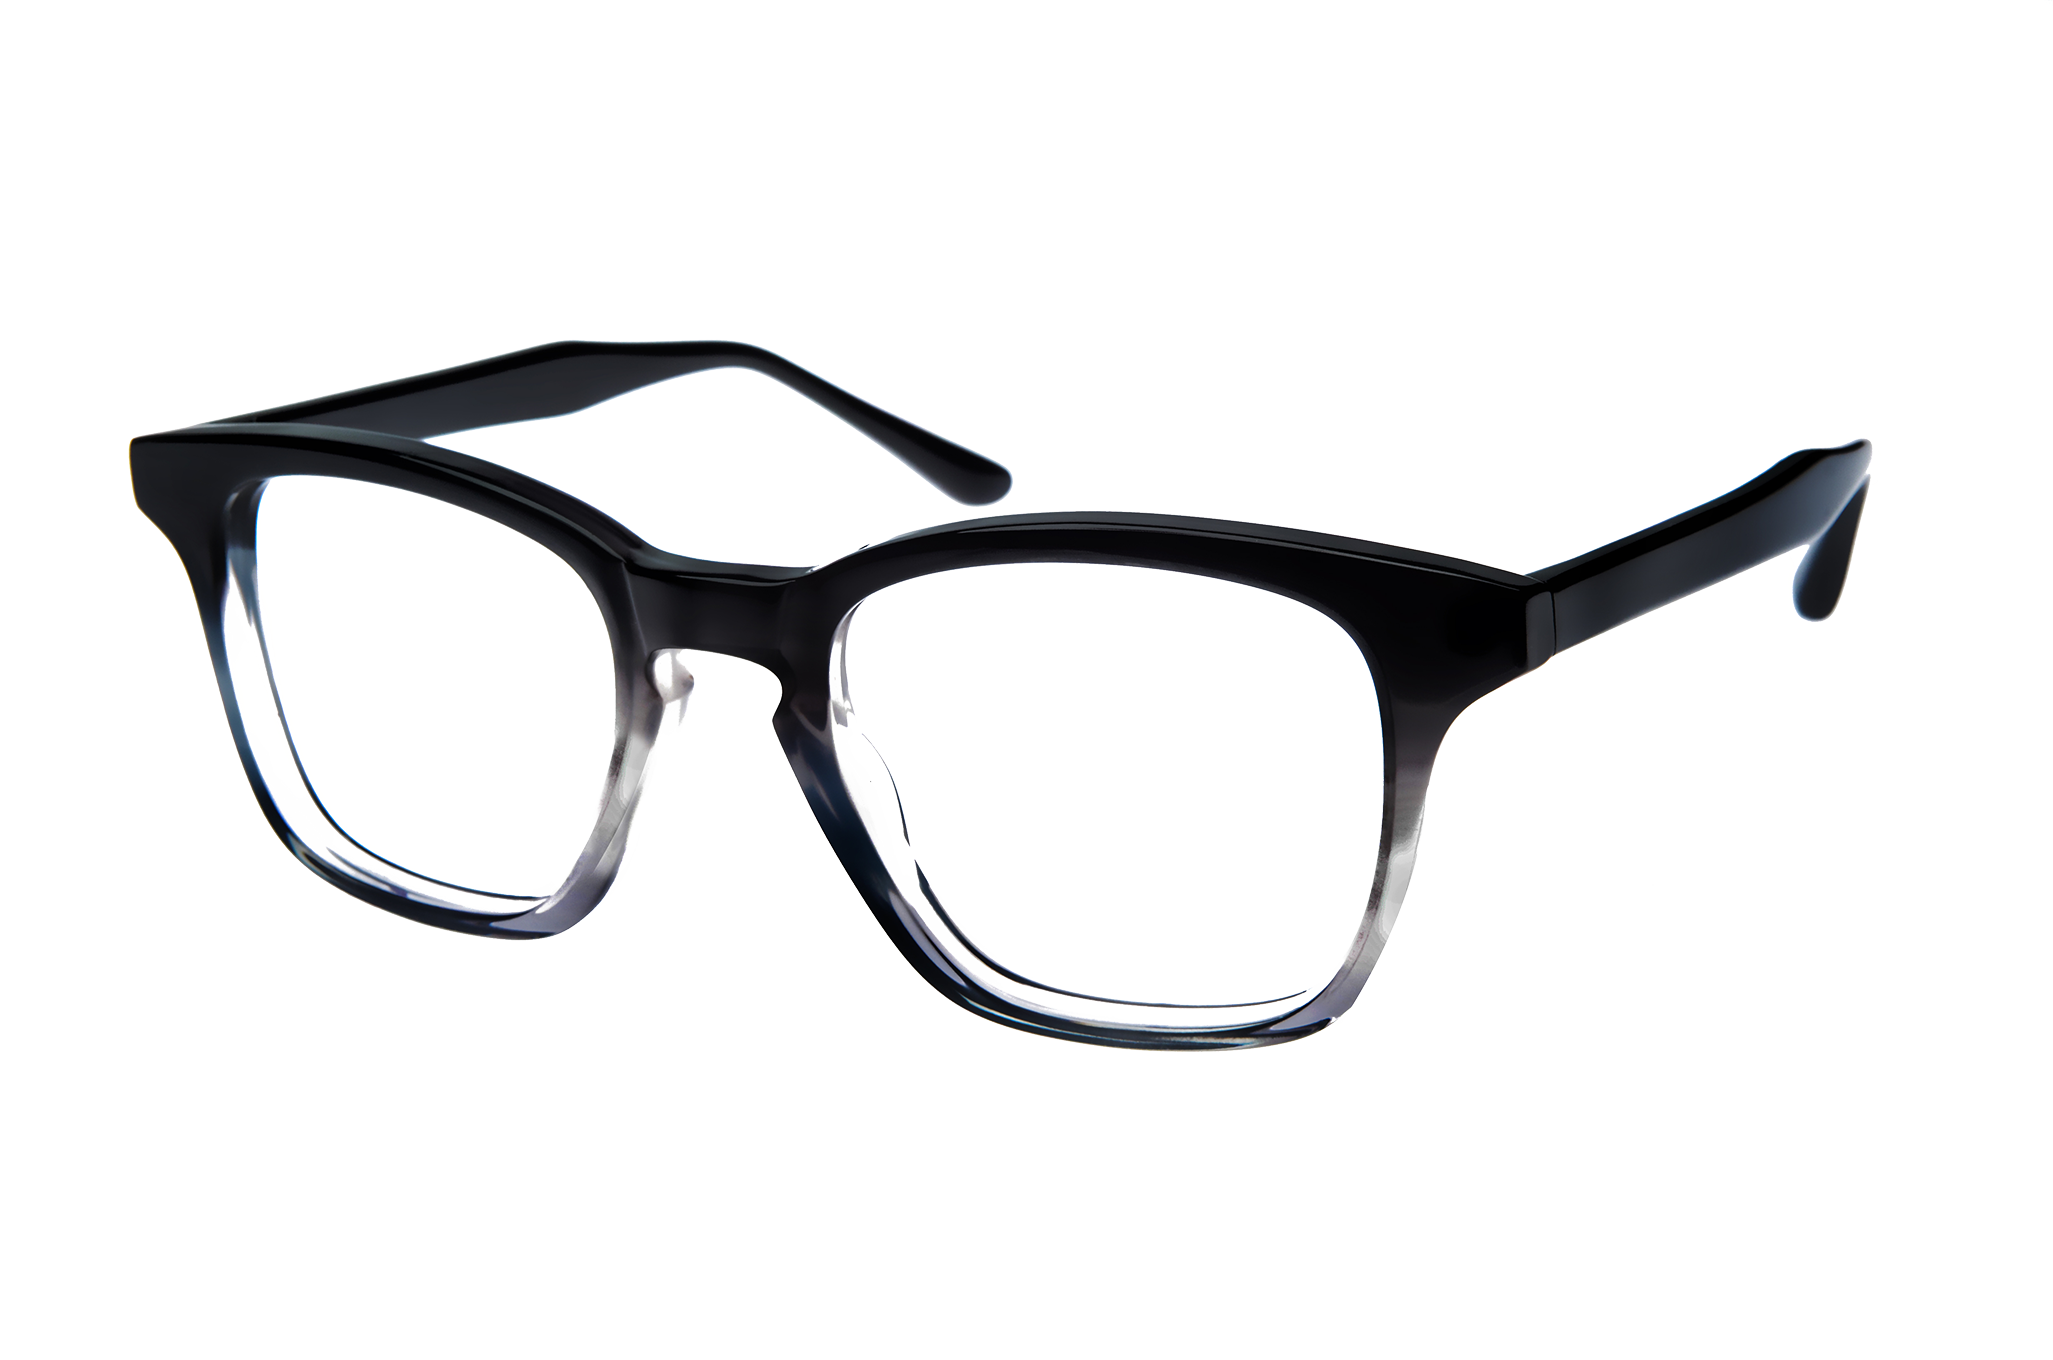 Download Glasses PNG Image - PurePNG | Free transparent CC0 PNG ...